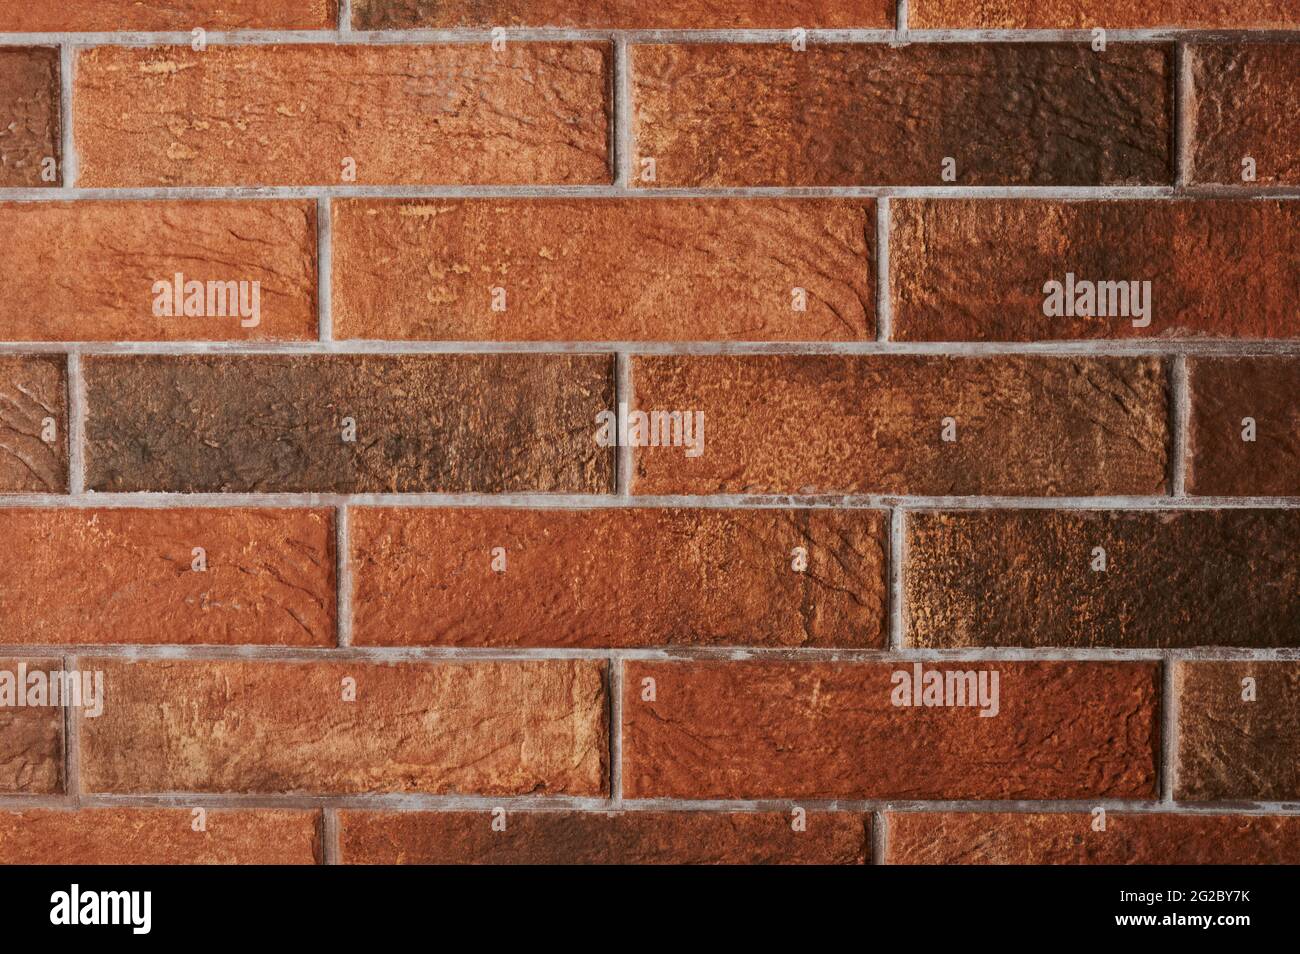 Wall of red brickwork flat view. Pattern of brown bricks Stock Photo